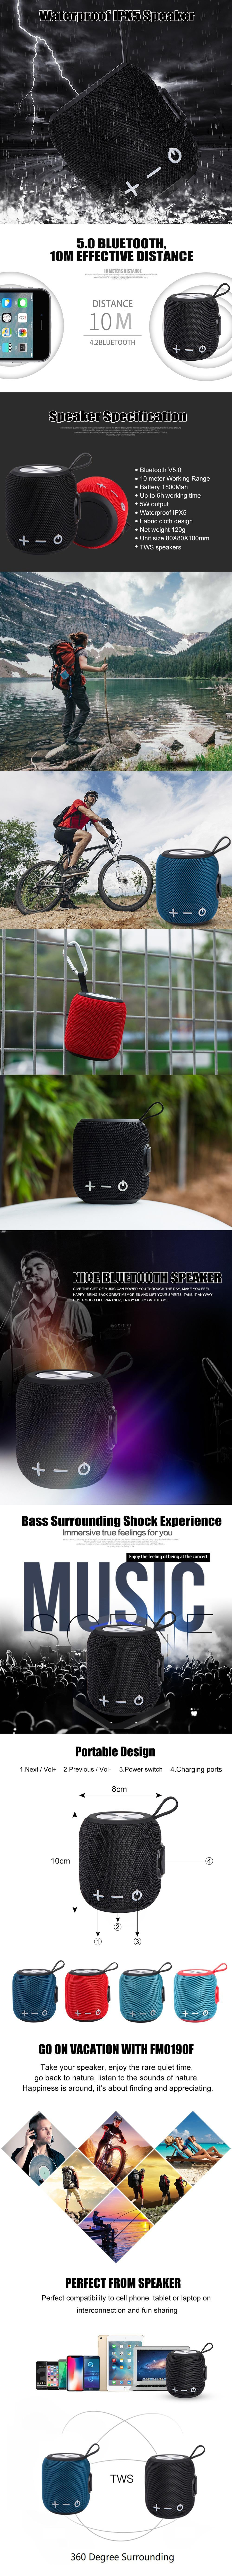 Mini alto-falante à prova d'água Bluetooth 5.0 JolyPops FM0190F